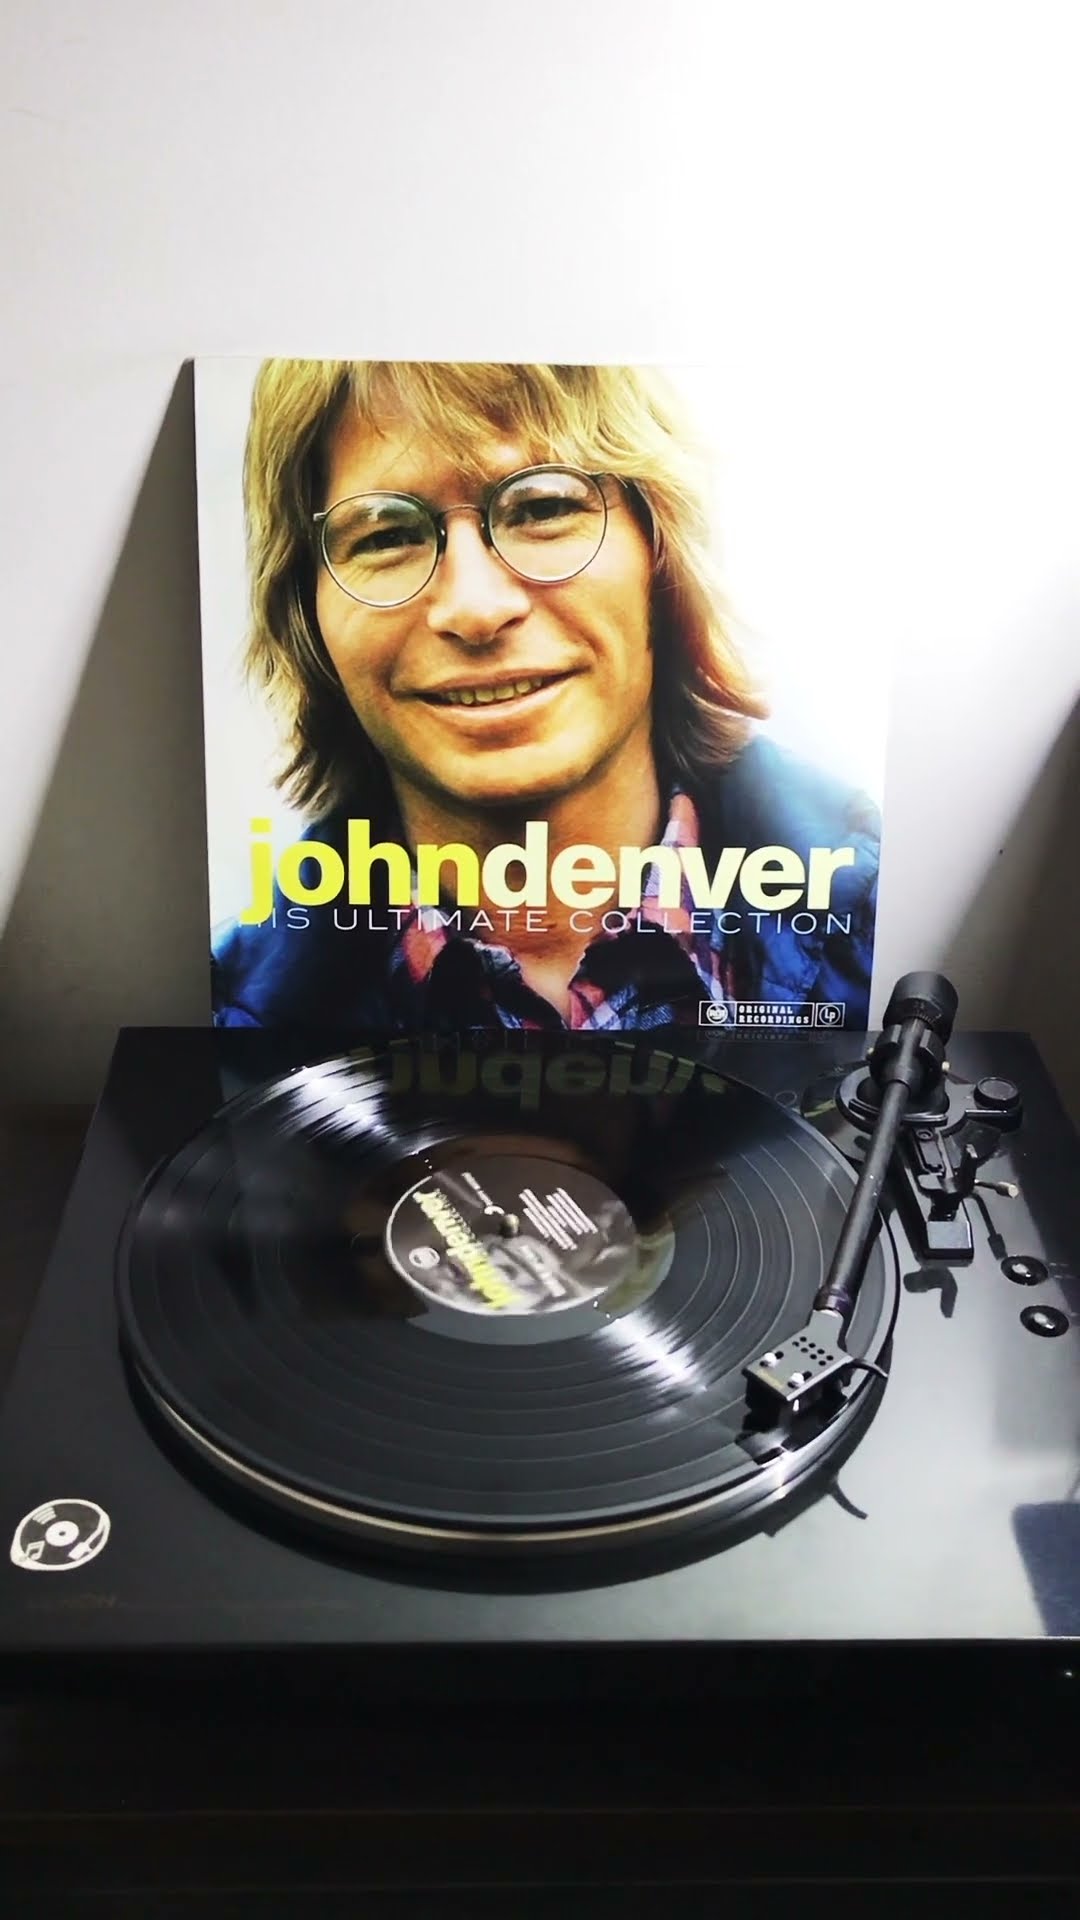 John Denver - Sunshine On My Shoulders (tradução) 